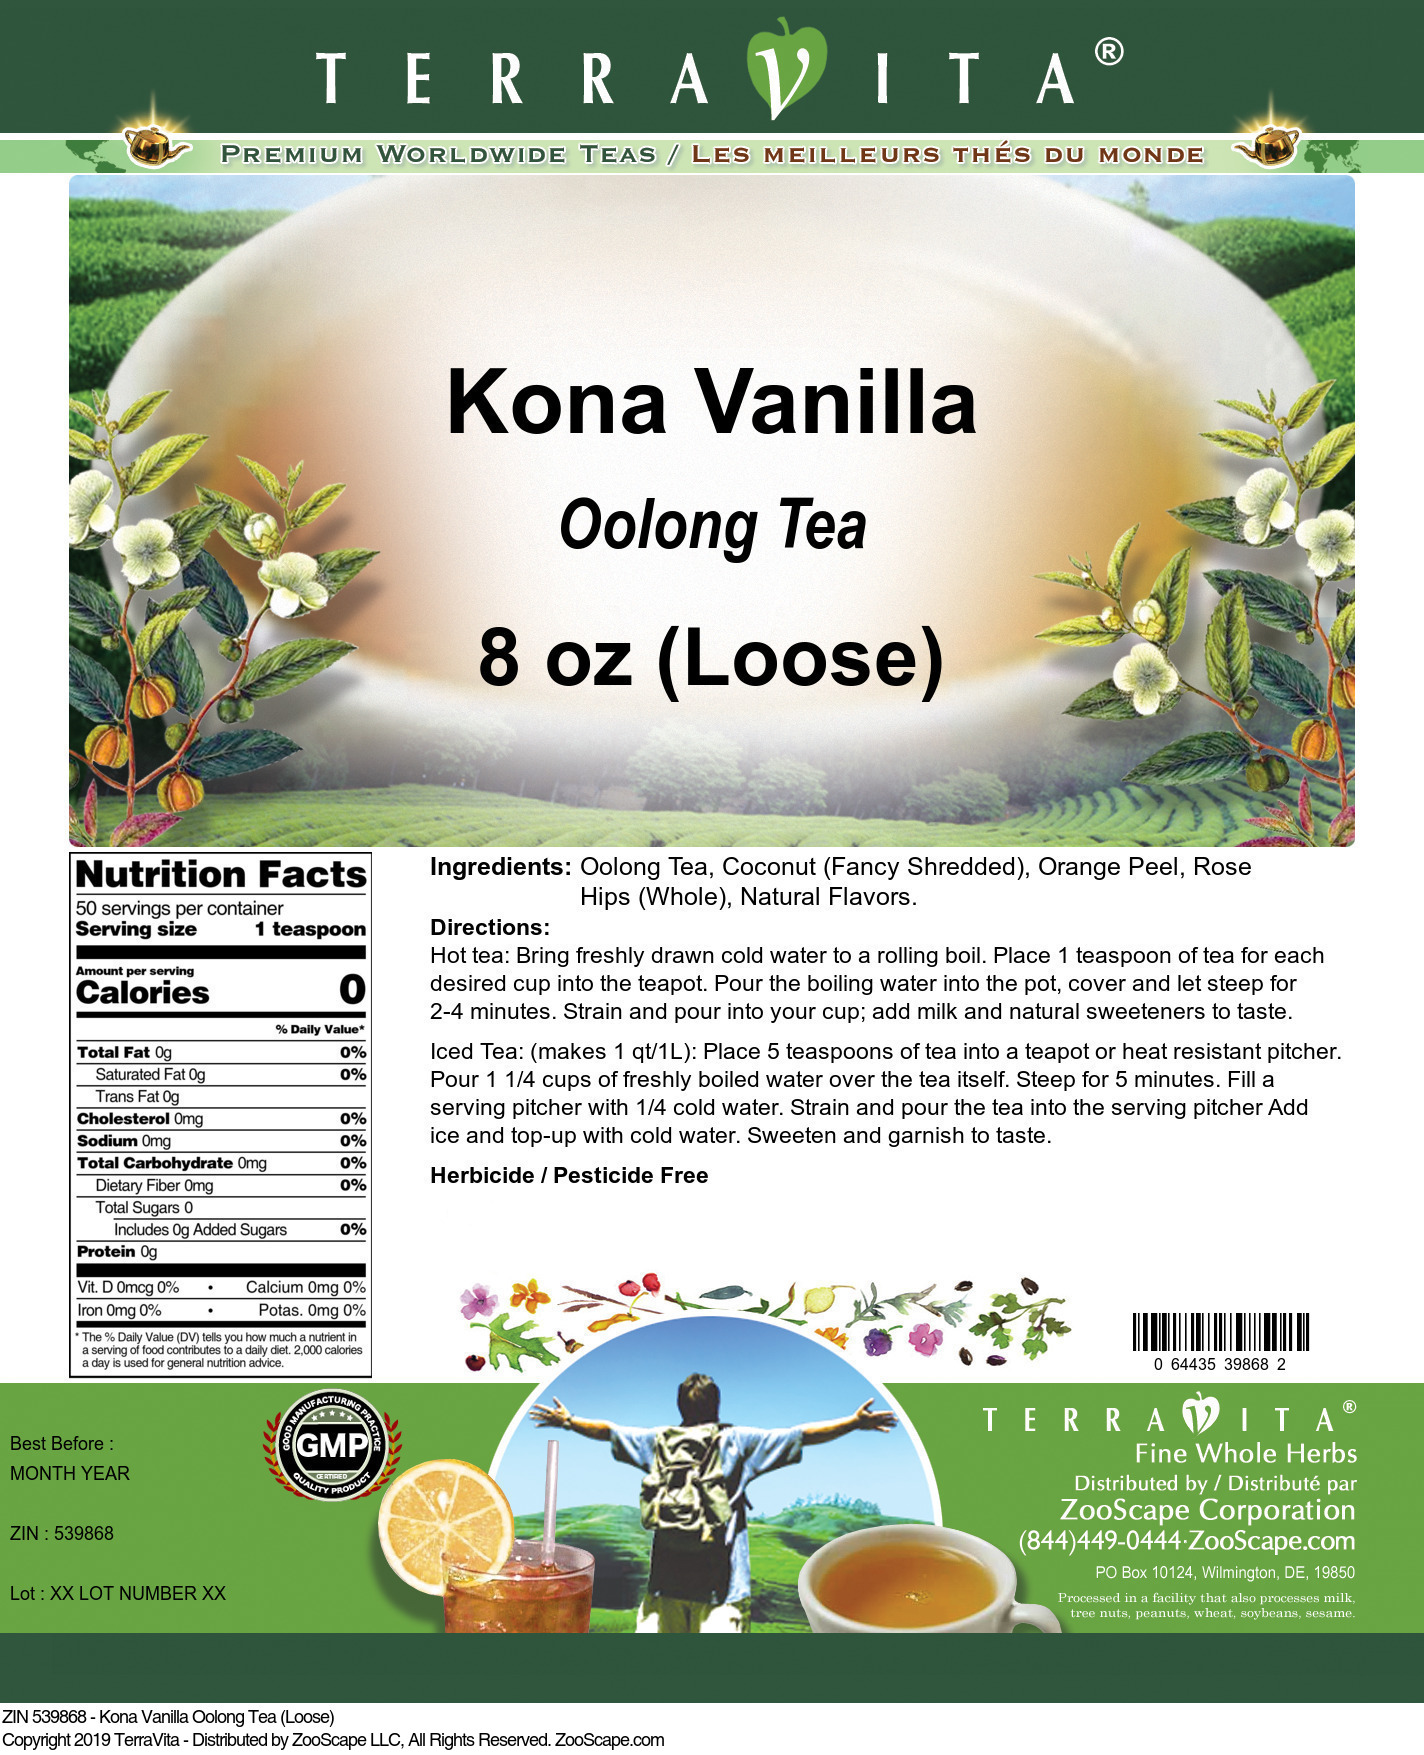 Kona Vanilla Oolong Tea (Loose) - Label